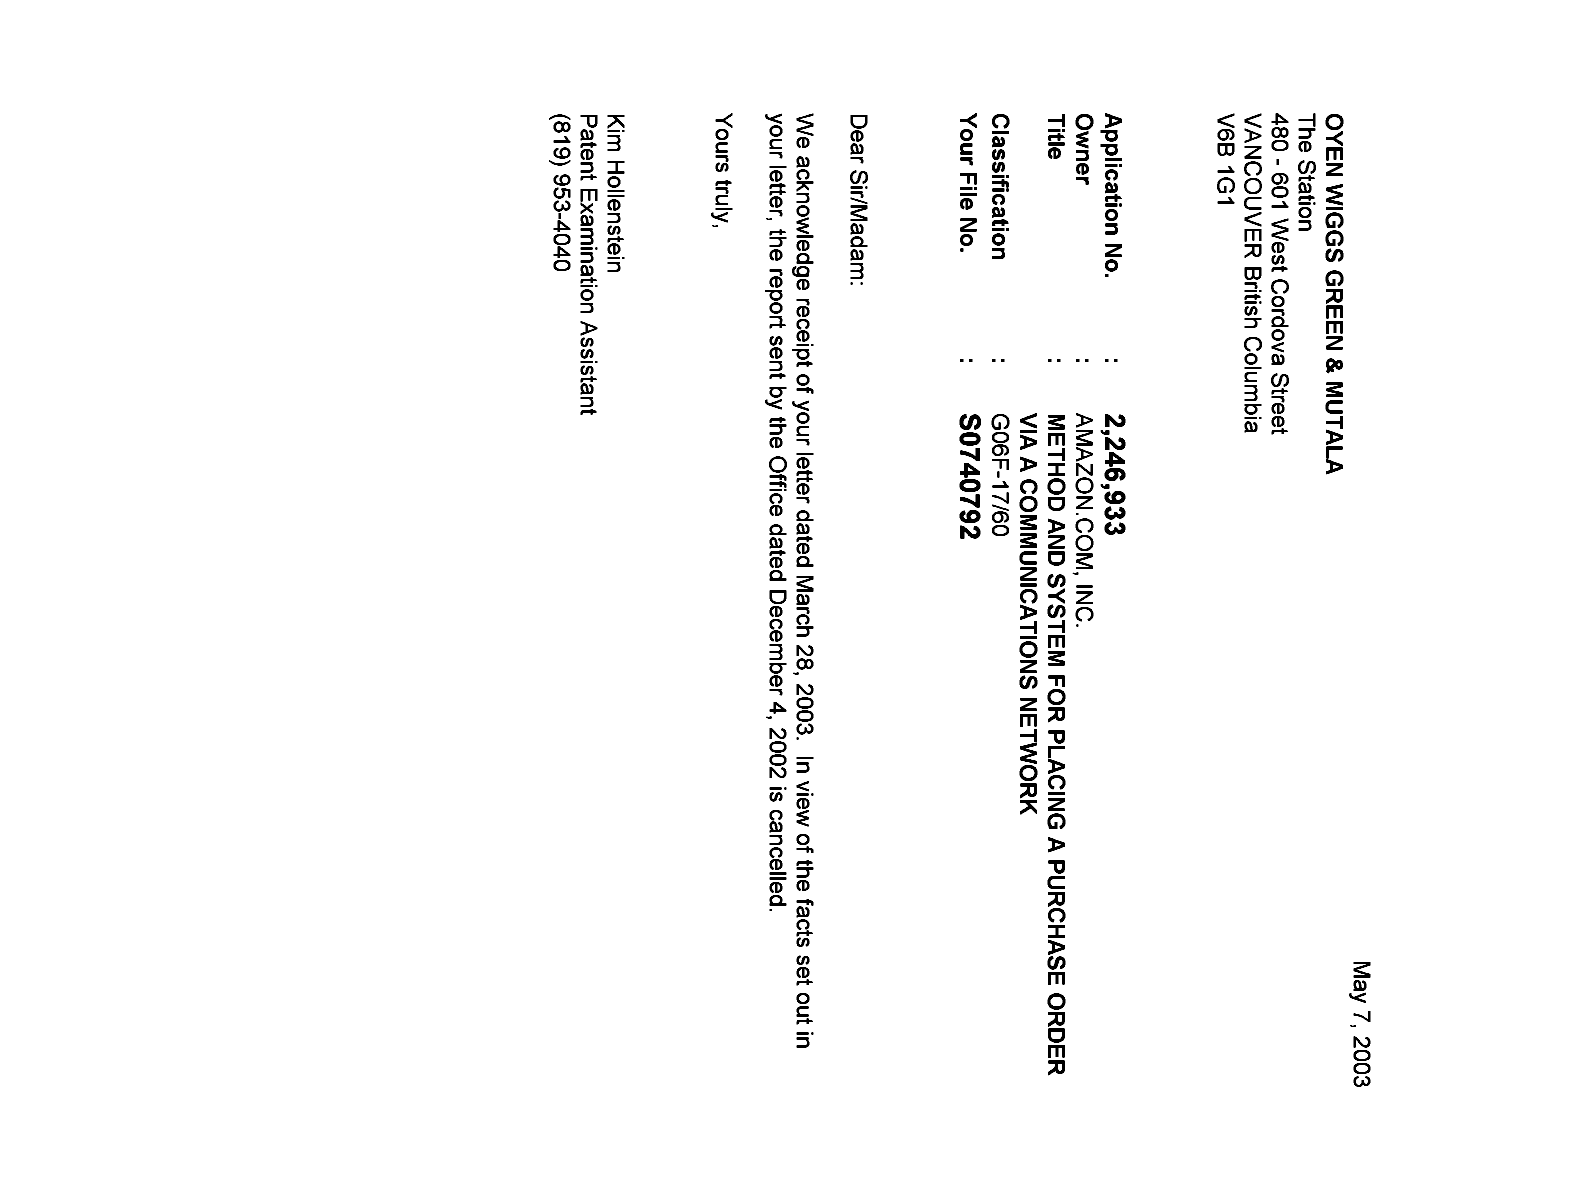 Canadian Patent Document 2246933. Correspondence 20030507. Image 1 of 1